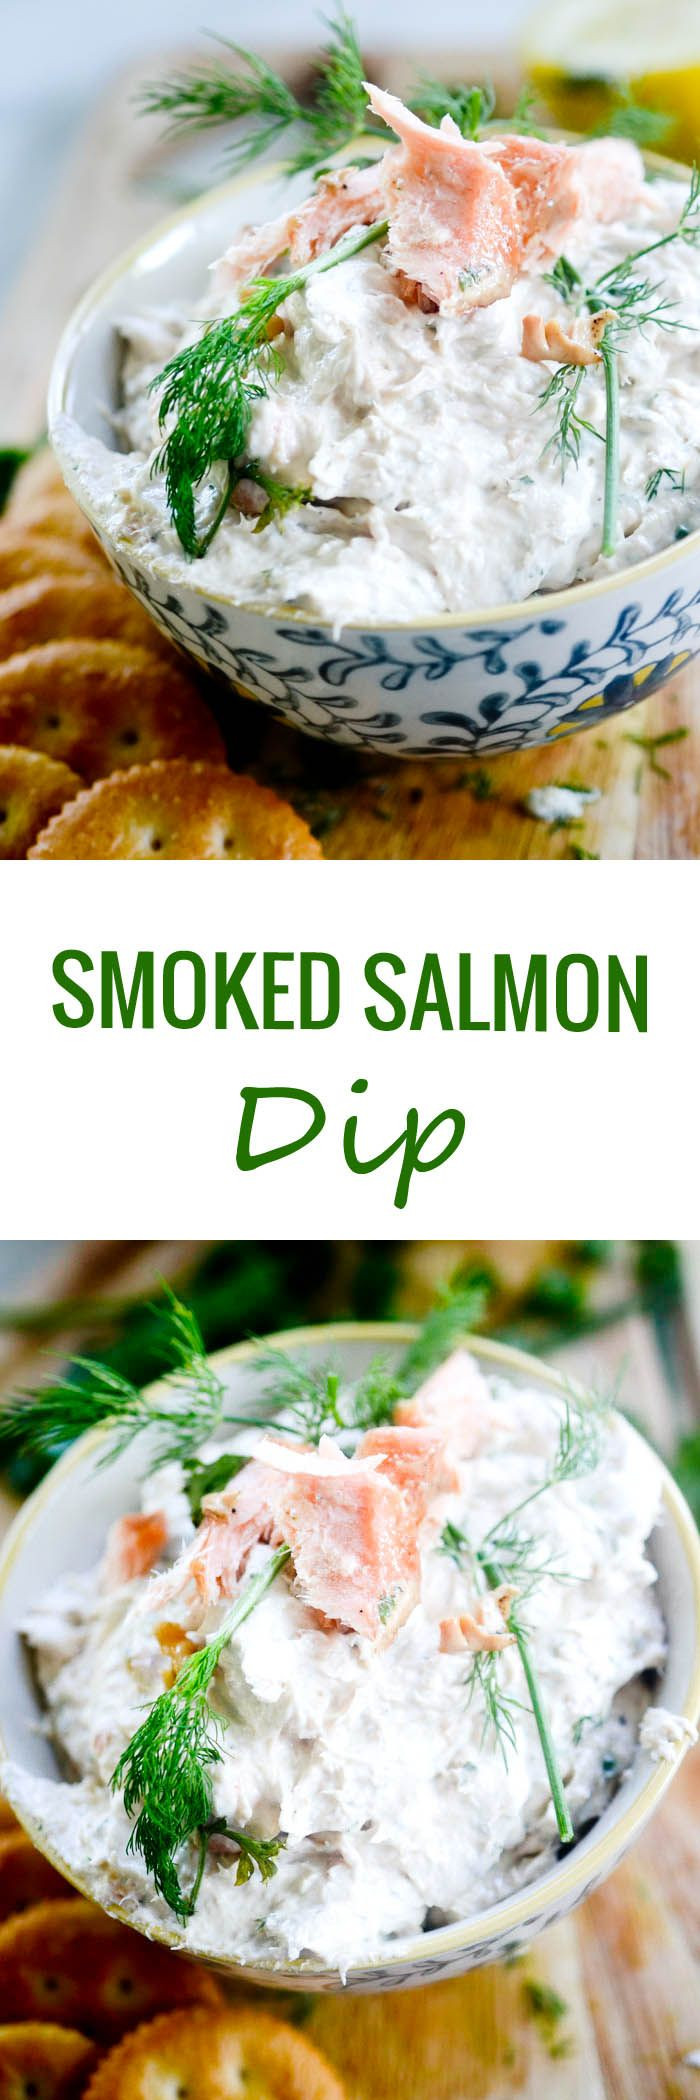 Best Smoked Salmon Recipe
 1000 ideas about Best Smoked Salmon on Pinterest